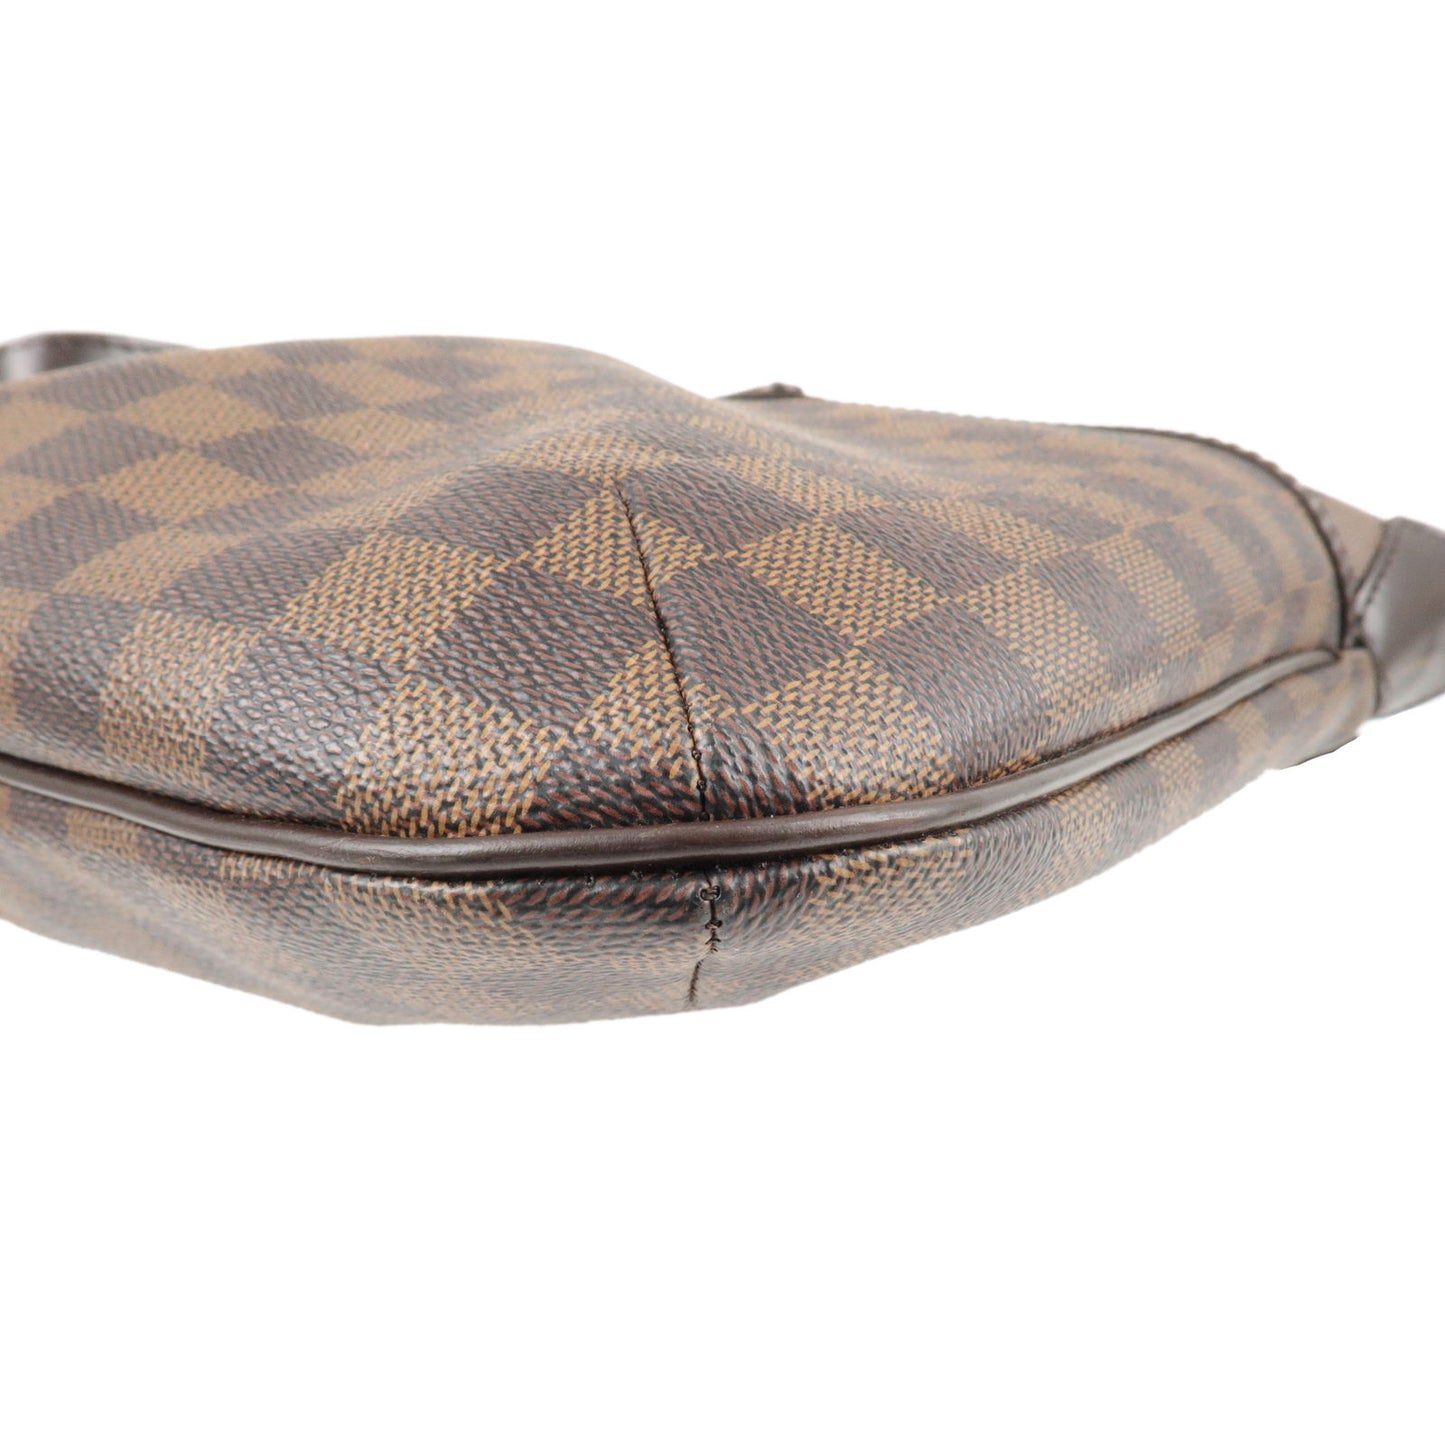 Louis-Vuitton-Damier-Bloomsbury-PM-Shoulder-Bag-N42251 – dct